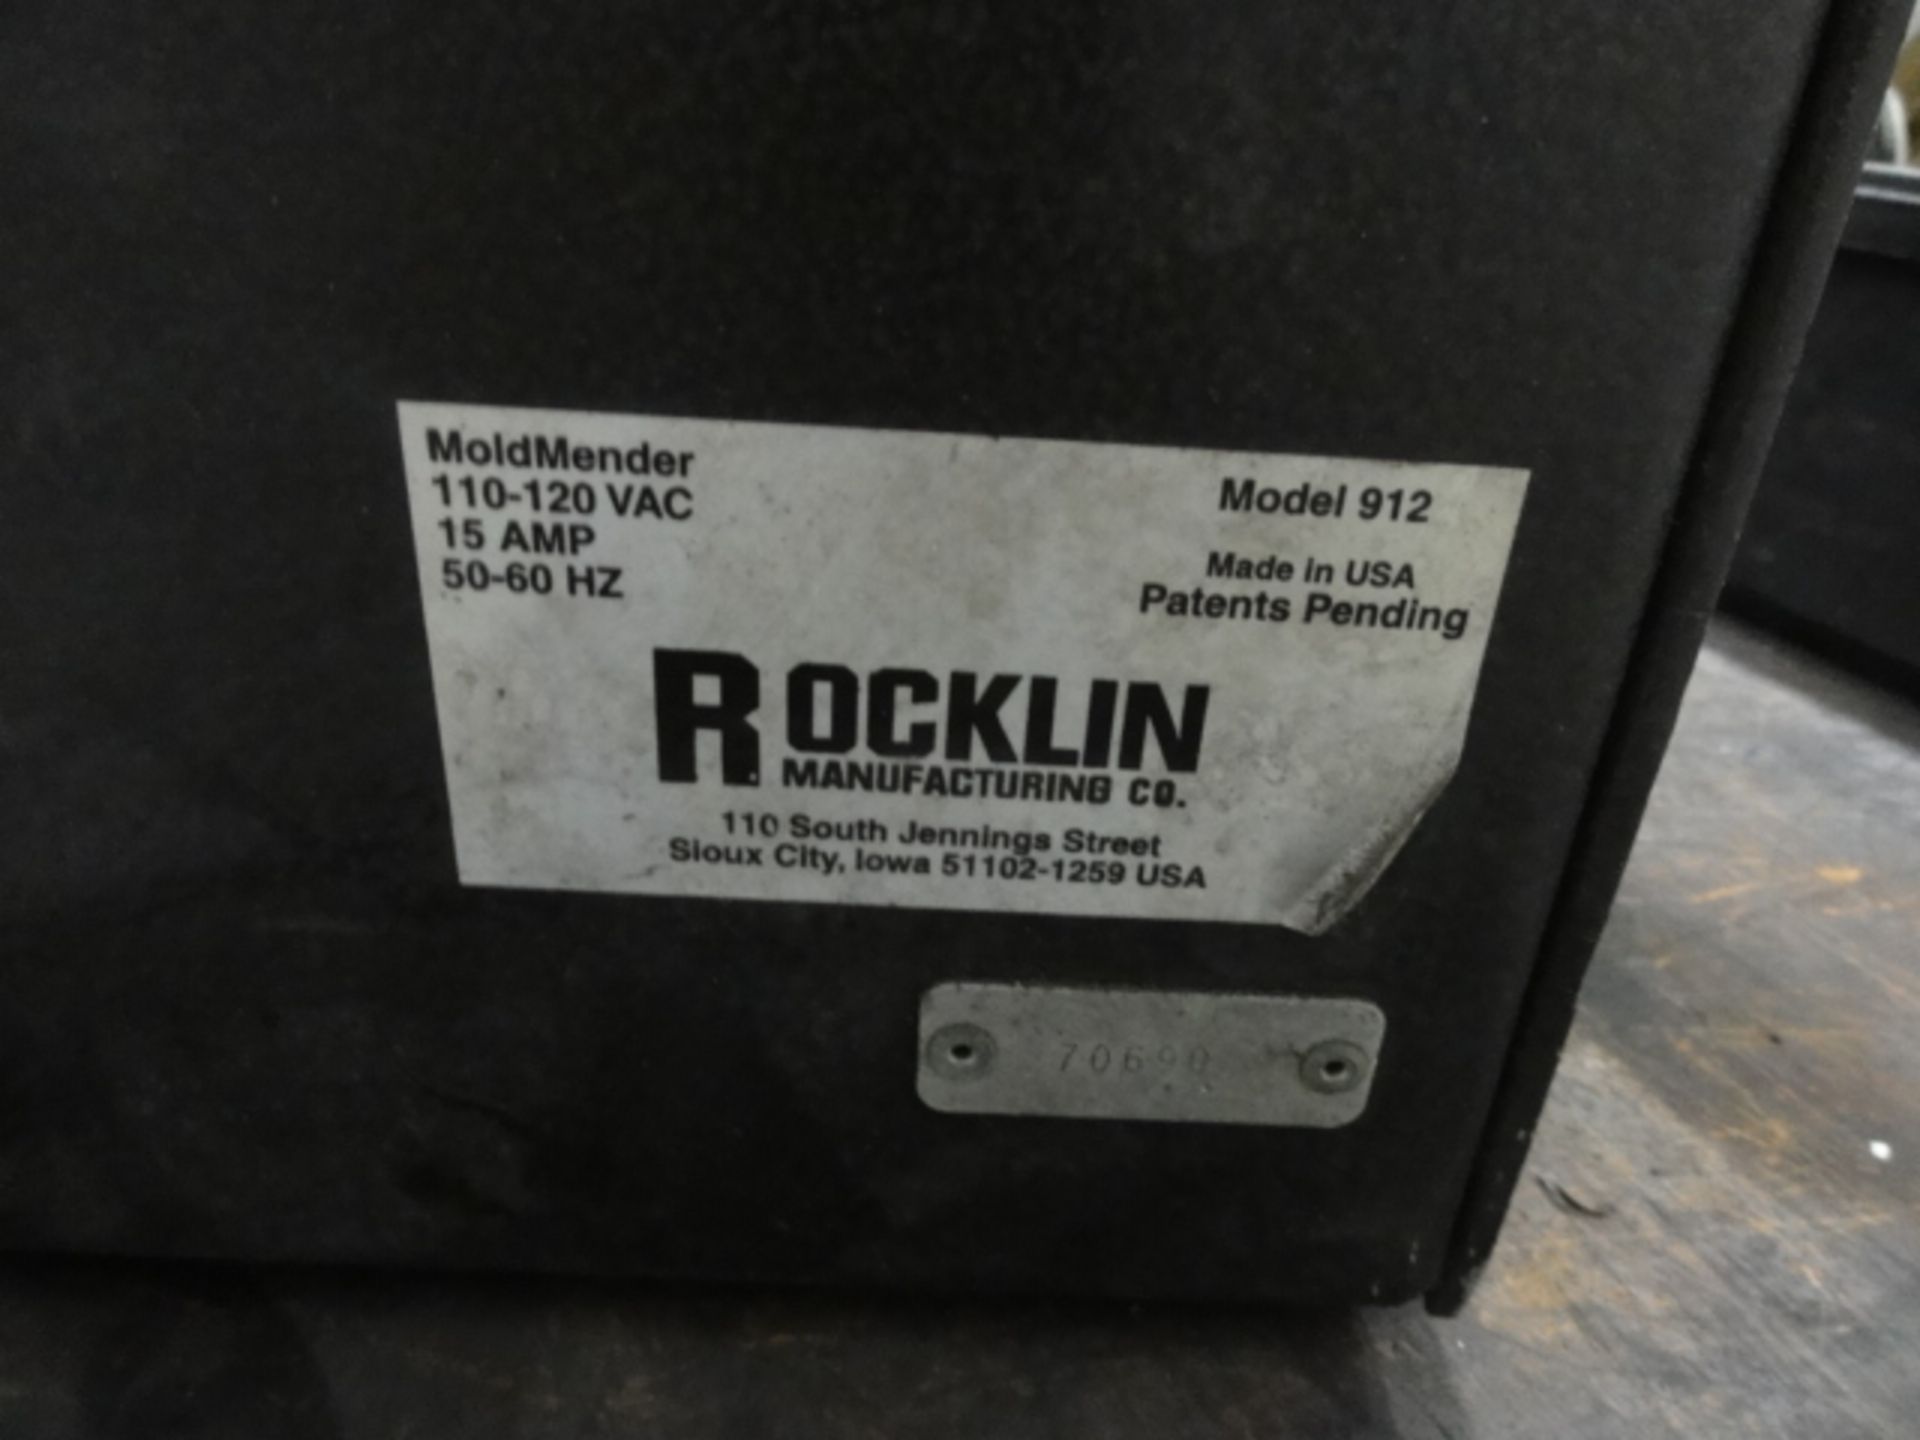 Rocklin Mold Mender Micro Welder, Model 912, w/ Associated Electrode & Ground, Foot Pedal - Image 3 of 3